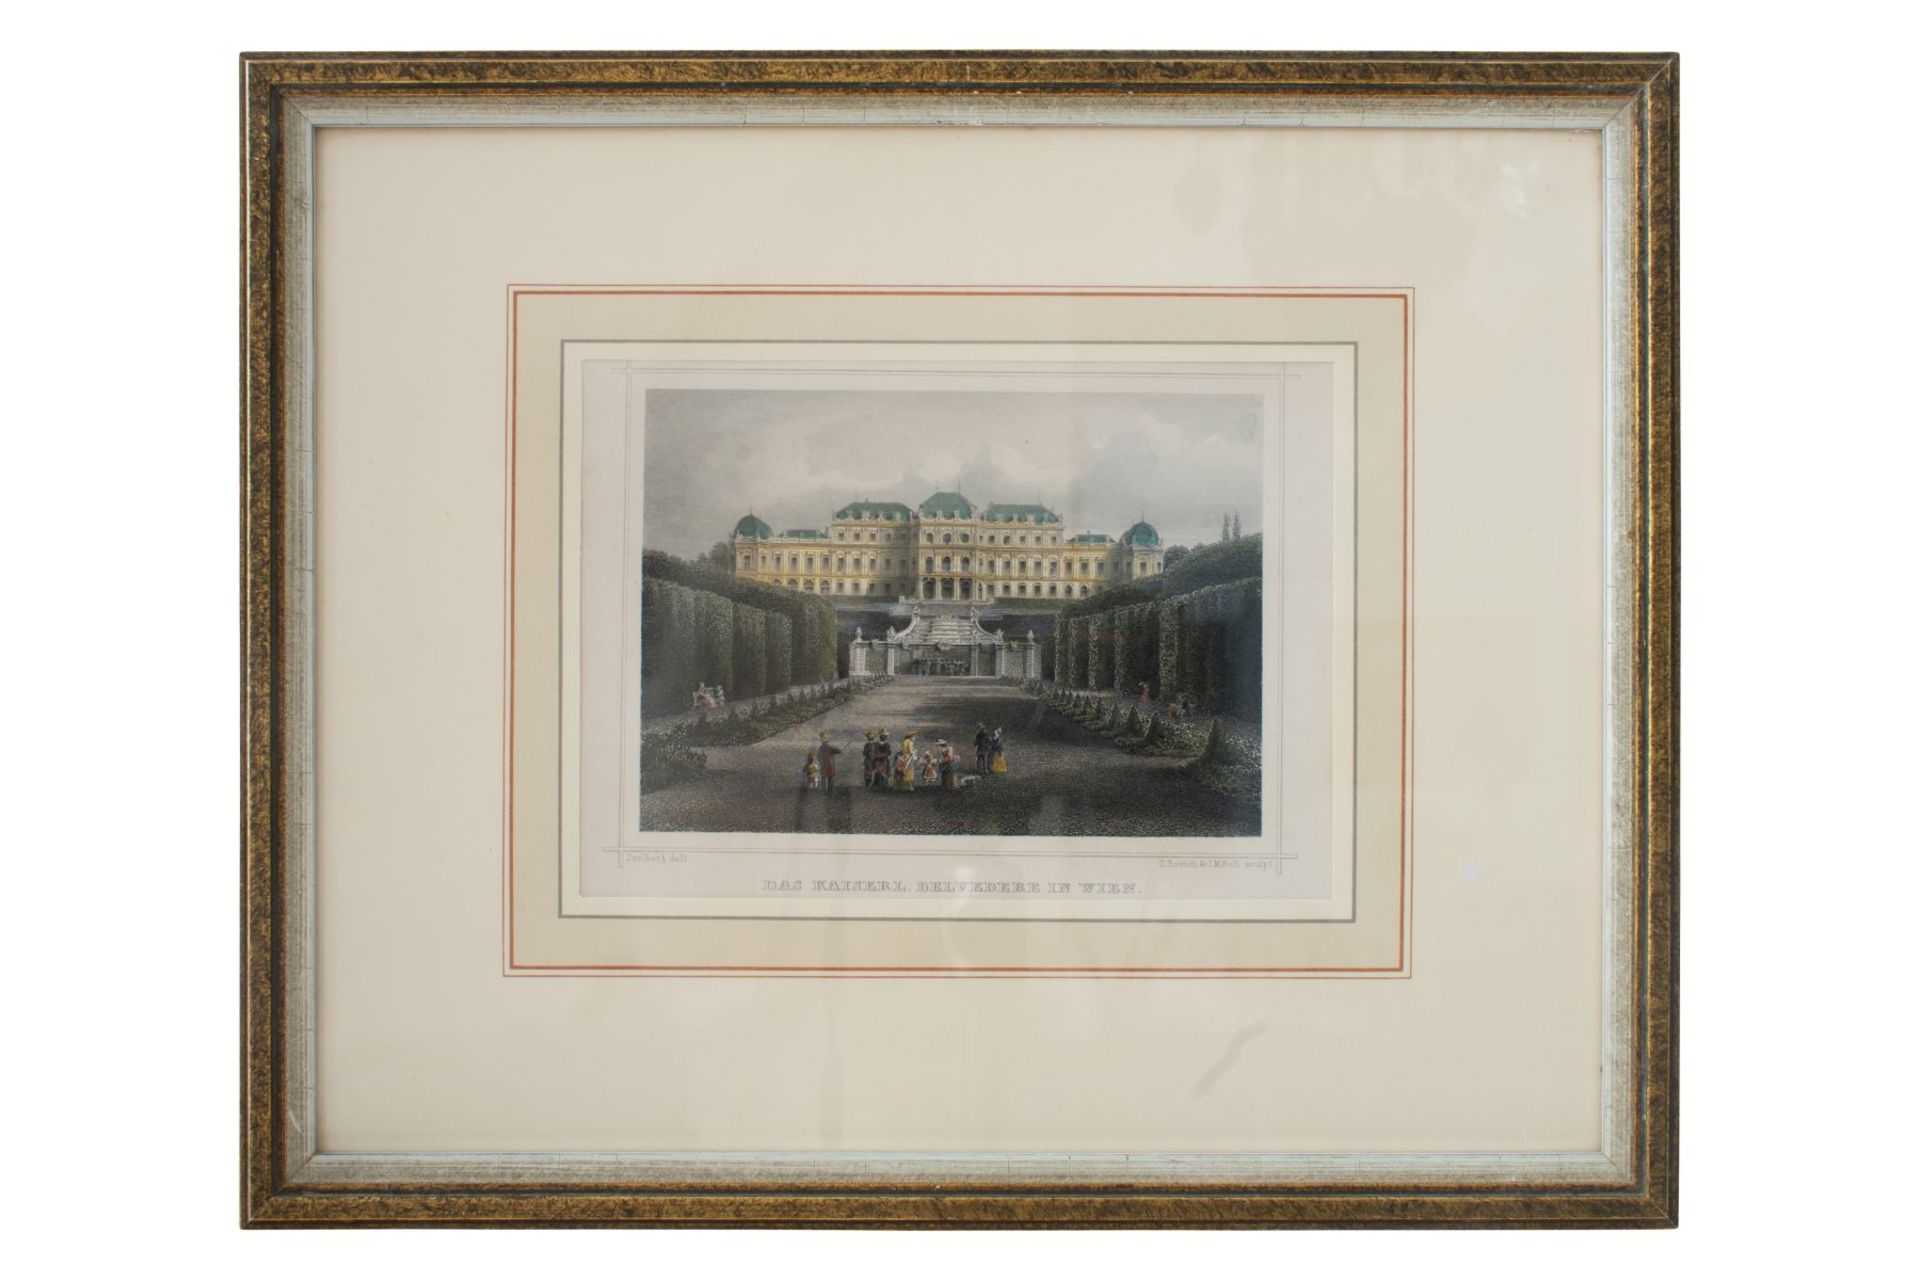 C. Rohrich(1817-1883) u. M. Kolb (1818-1859) "The Imperial Belvedere in Vienna".